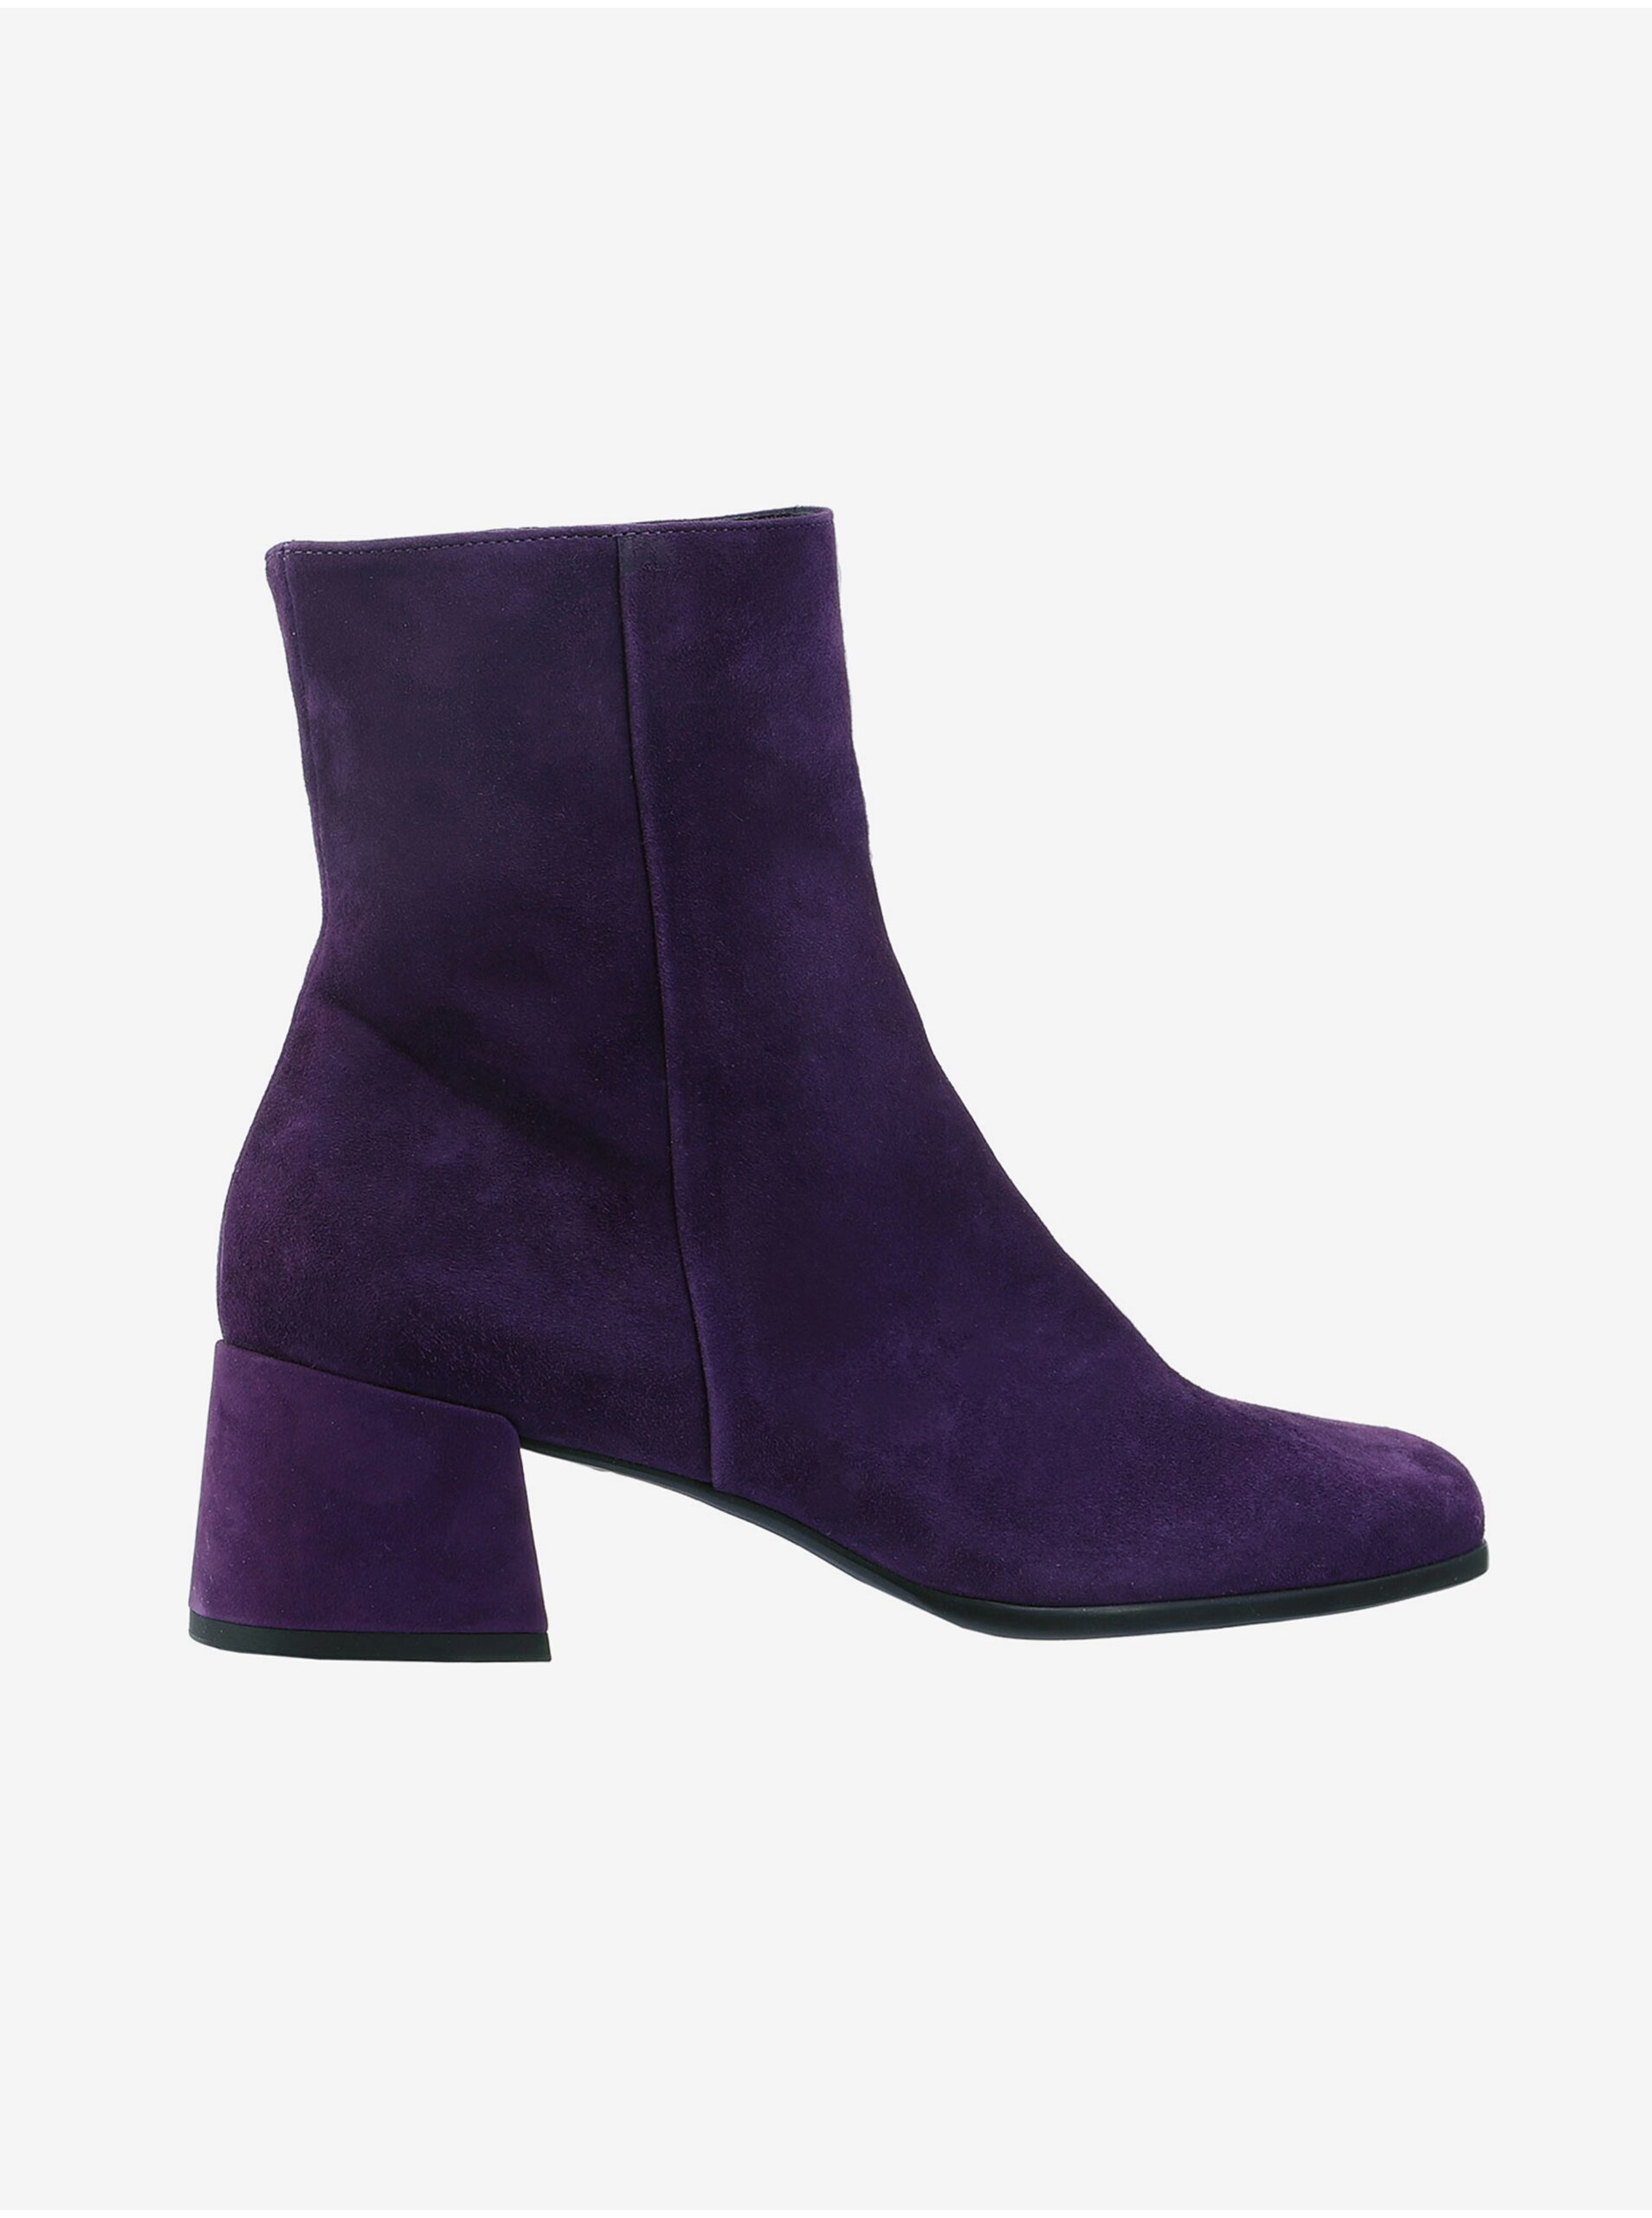 Purple women's suede ankle boots Högl Lou - Women